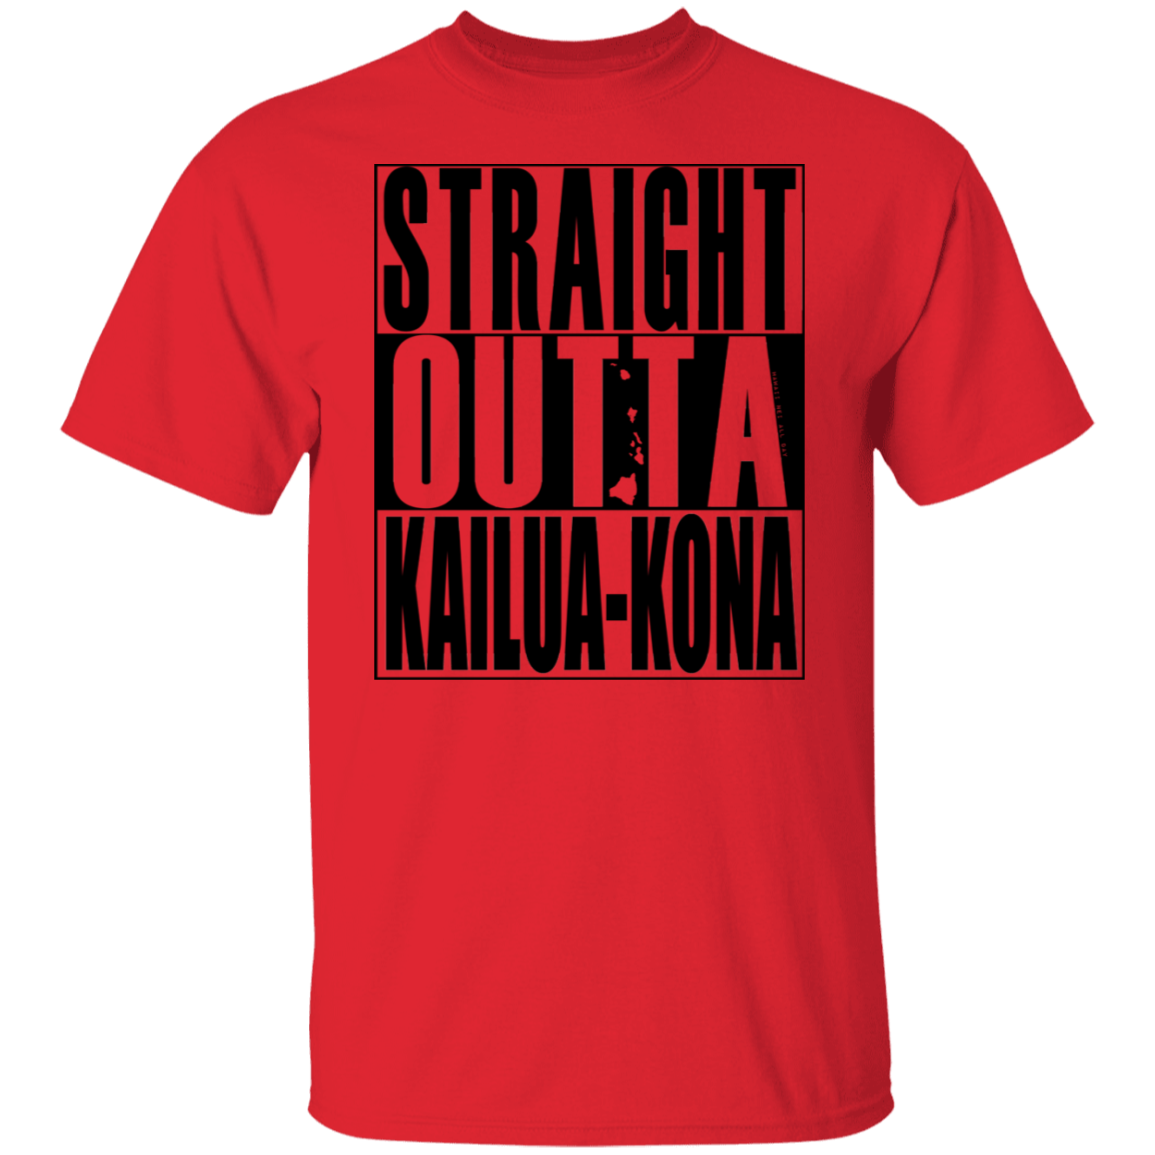 Straight Outta Kailua-Kona(black ink) T-Shirt